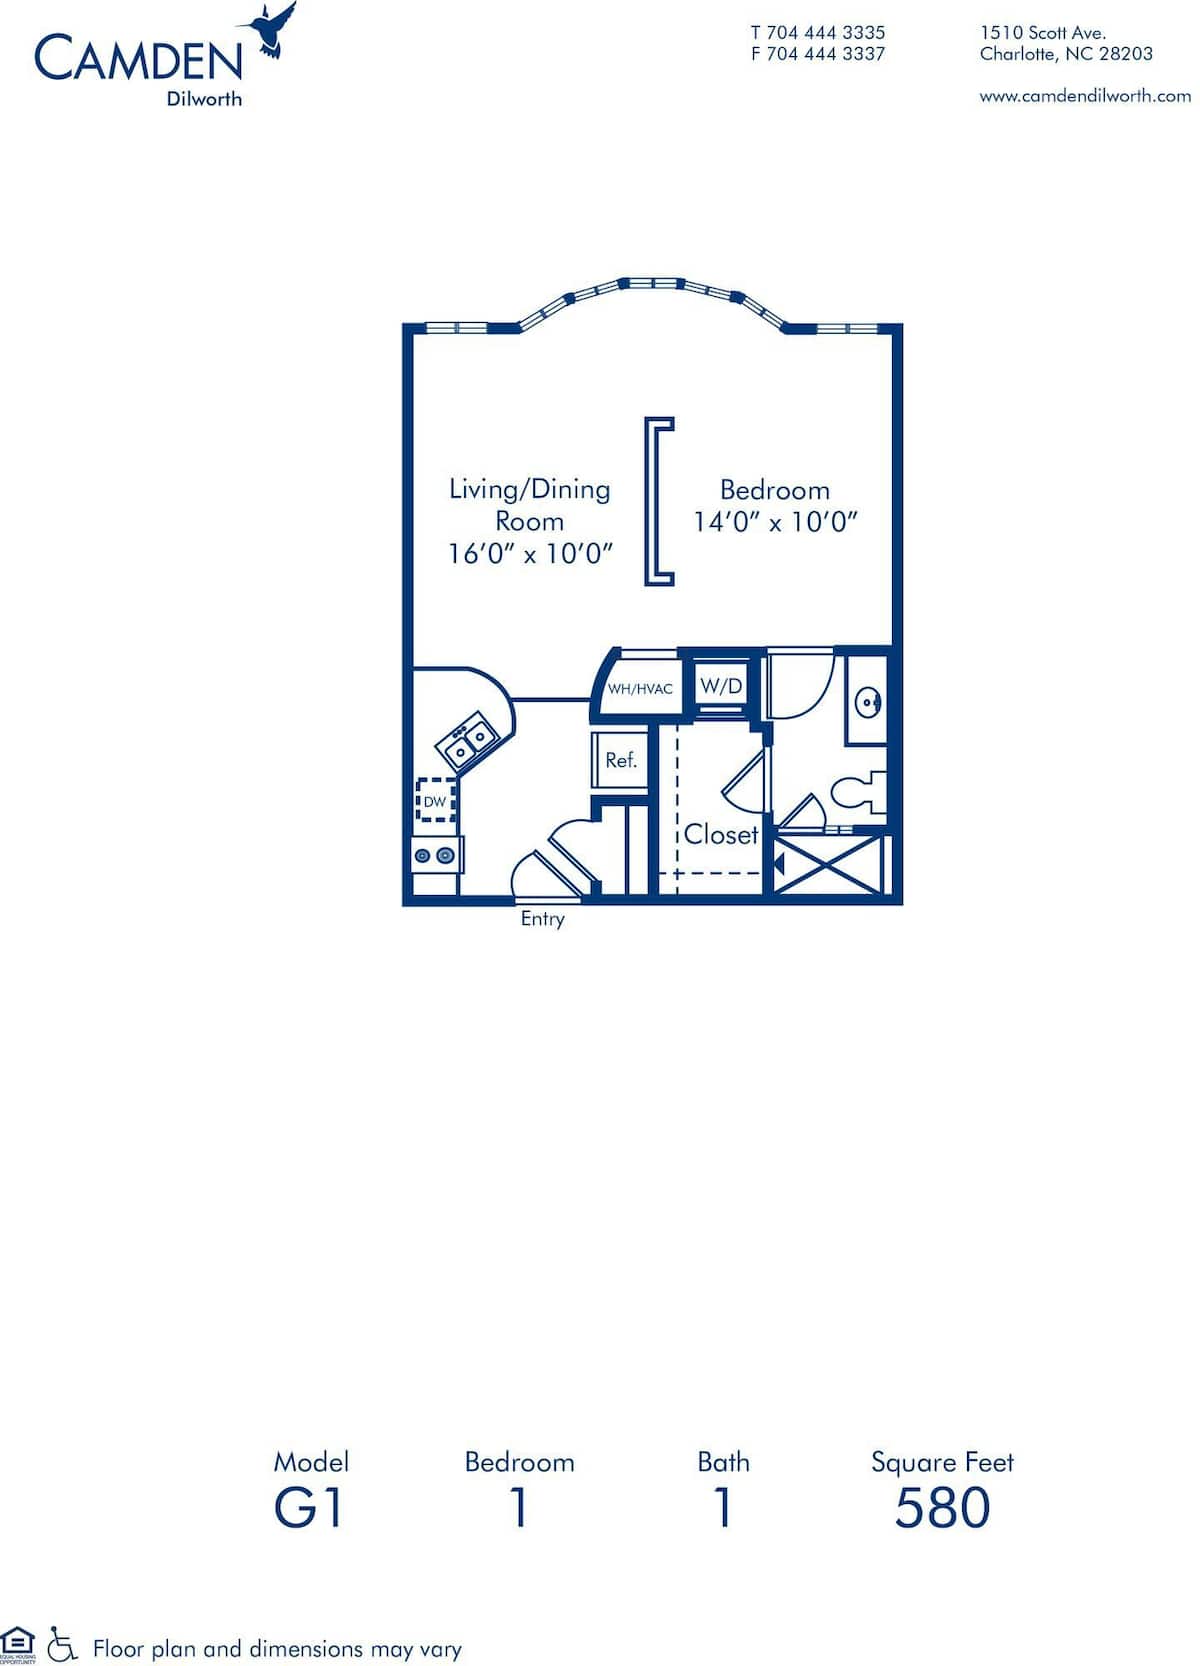 Floorplan diagram for G1, showing 1 bedroom